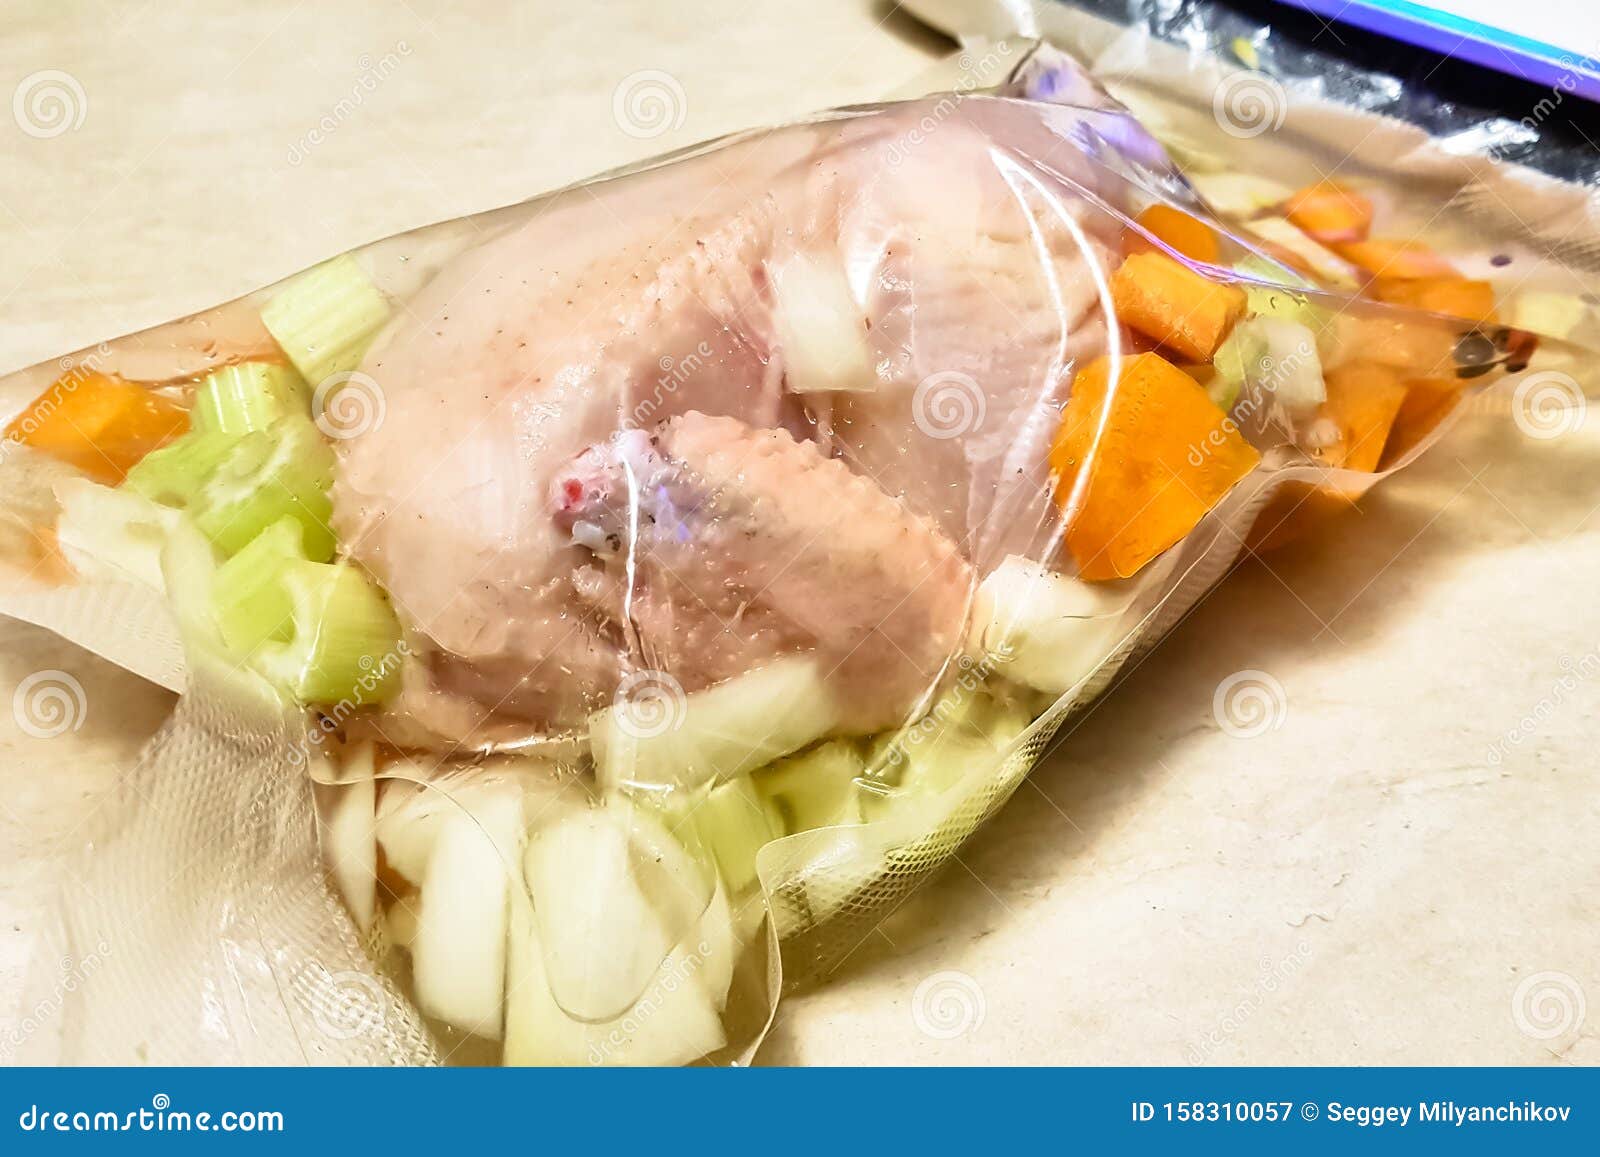 Ploeg Factureerbaar ondergronds Chicken with Vegetables in a Vacuum Bag Stock Image - Image of dyed, salad:  158310057